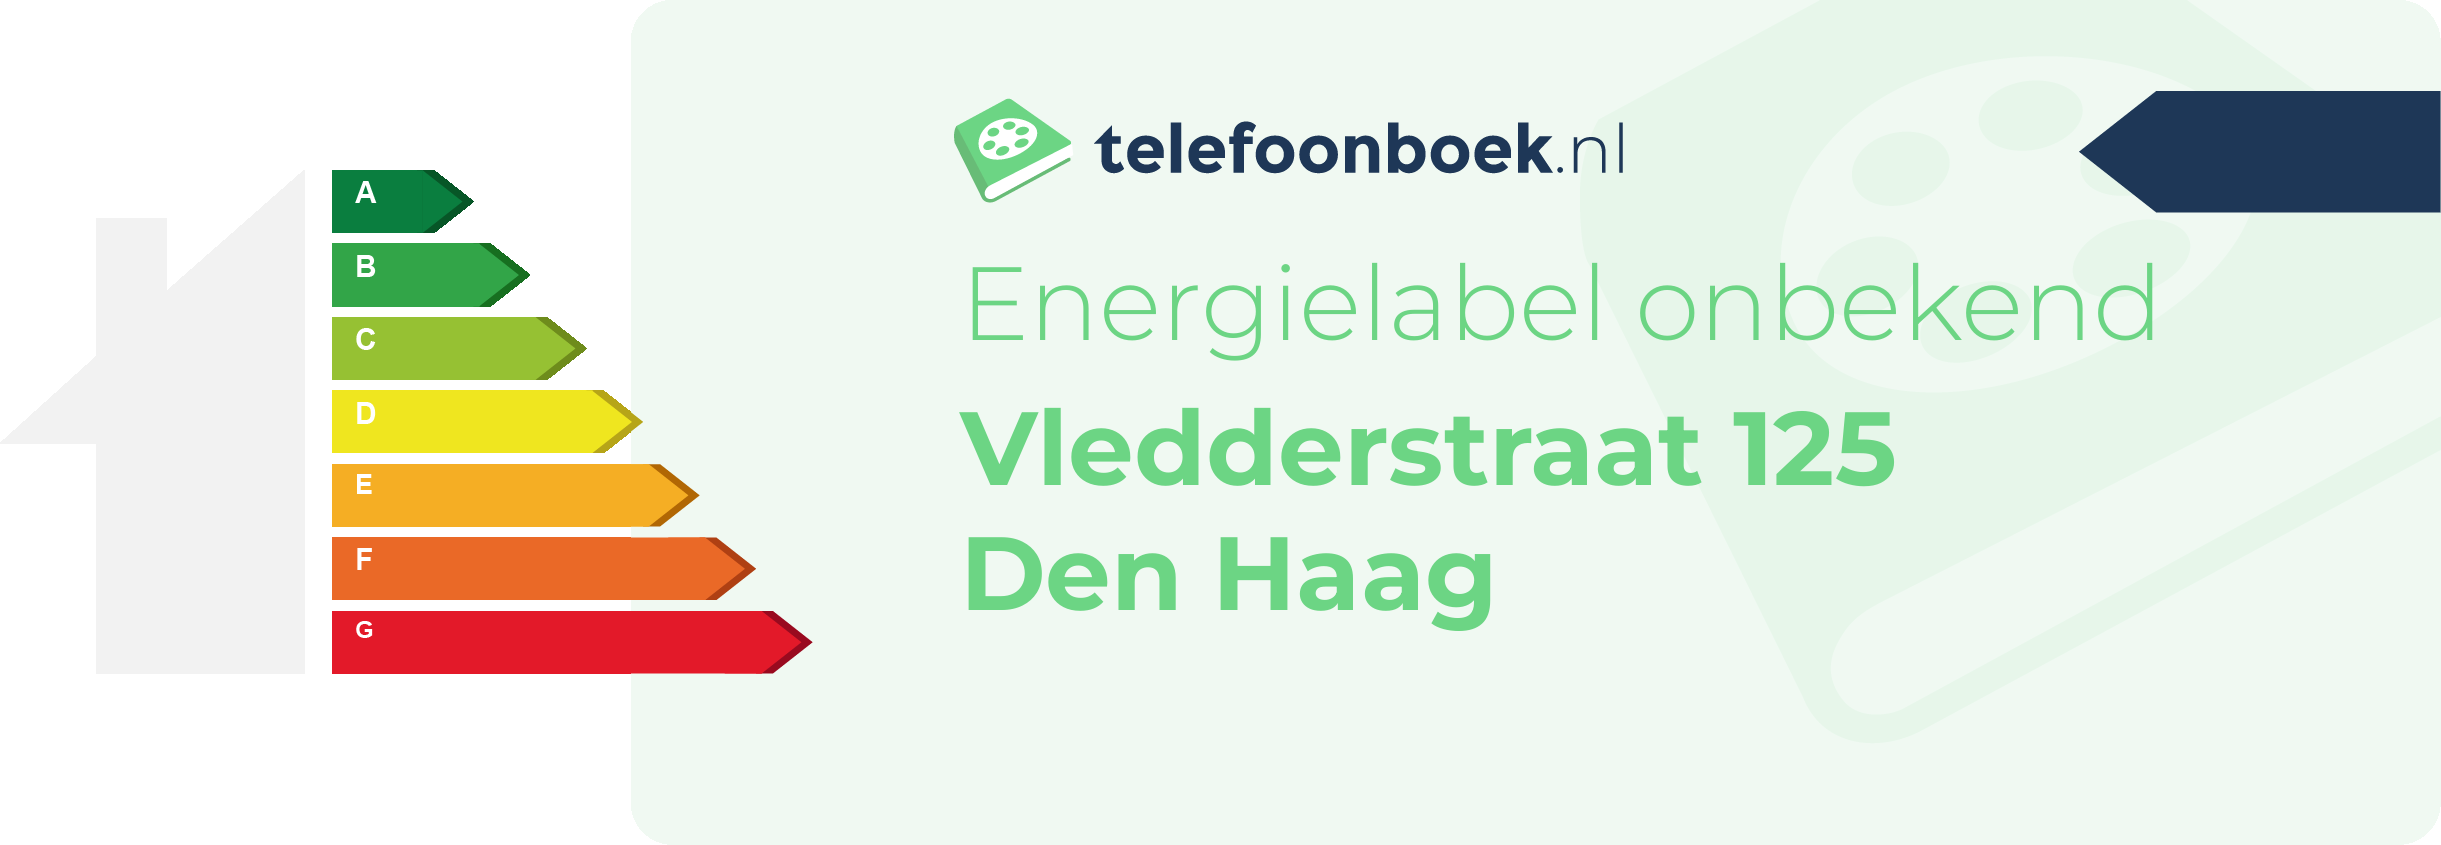 Energielabel Vledderstraat 125 Den Haag